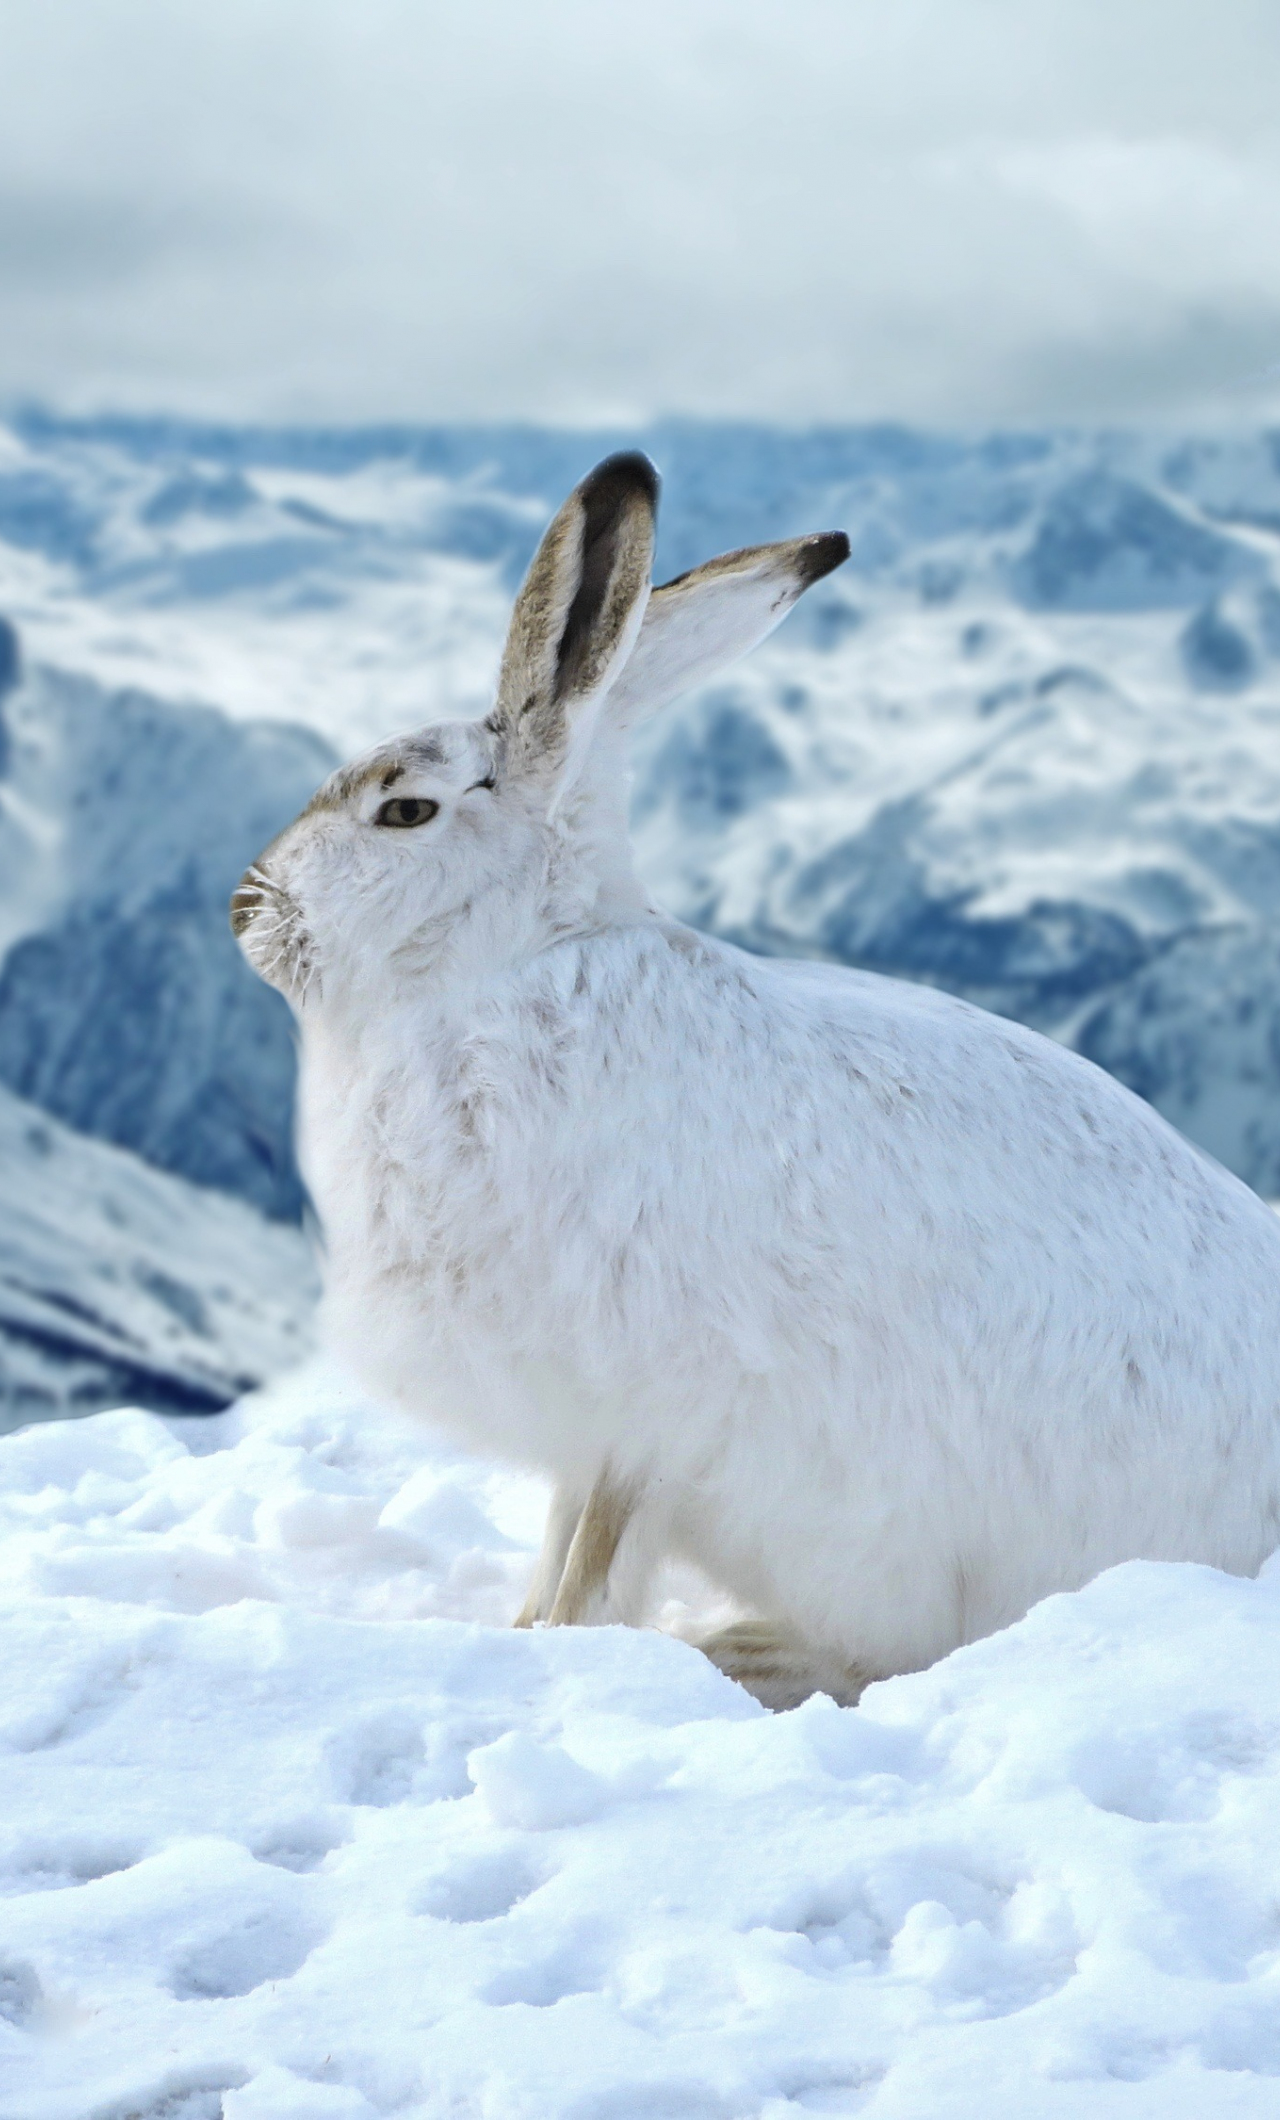 Download bunny, rabbit, animal, winter, outdoor 1280x2120 wallpaper, iphone 6 plus, 1280x2120 HD image, background, 2119